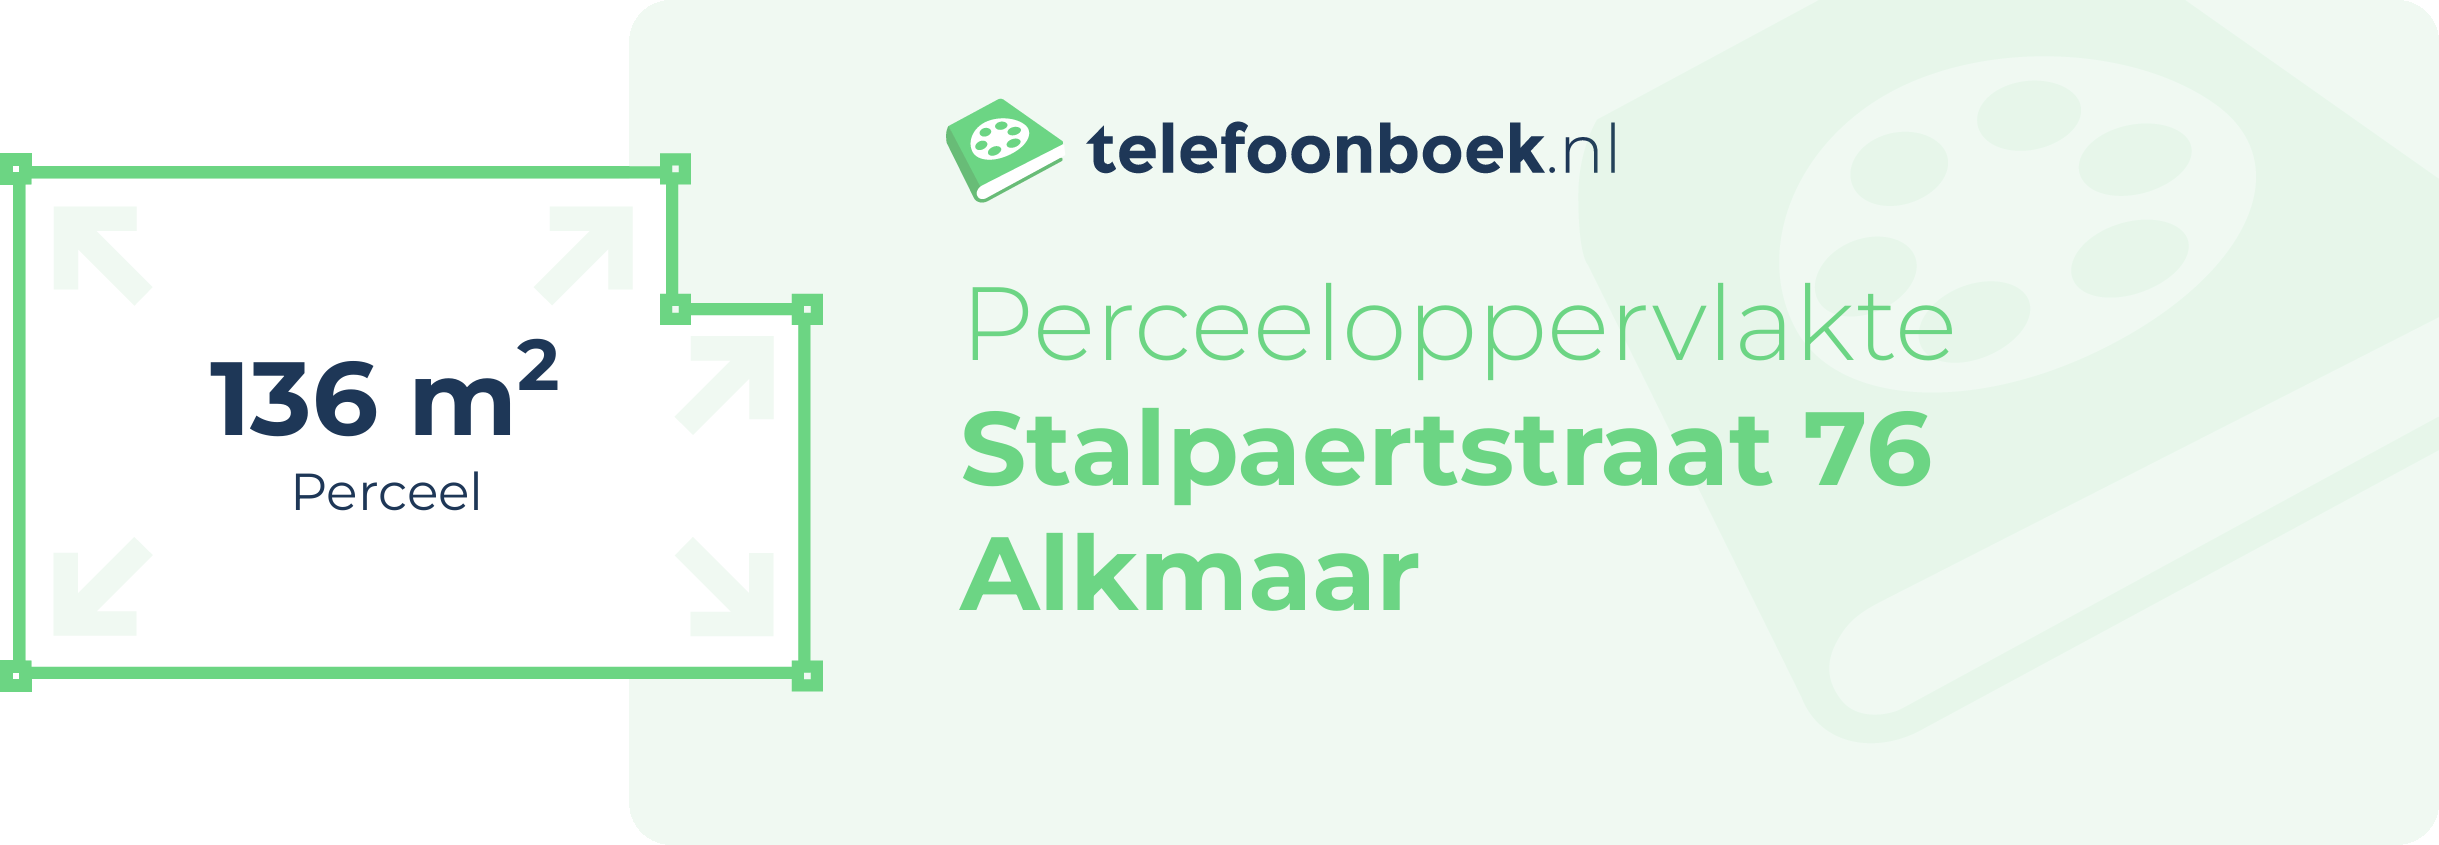 Perceeloppervlakte Stalpaertstraat 76 Alkmaar